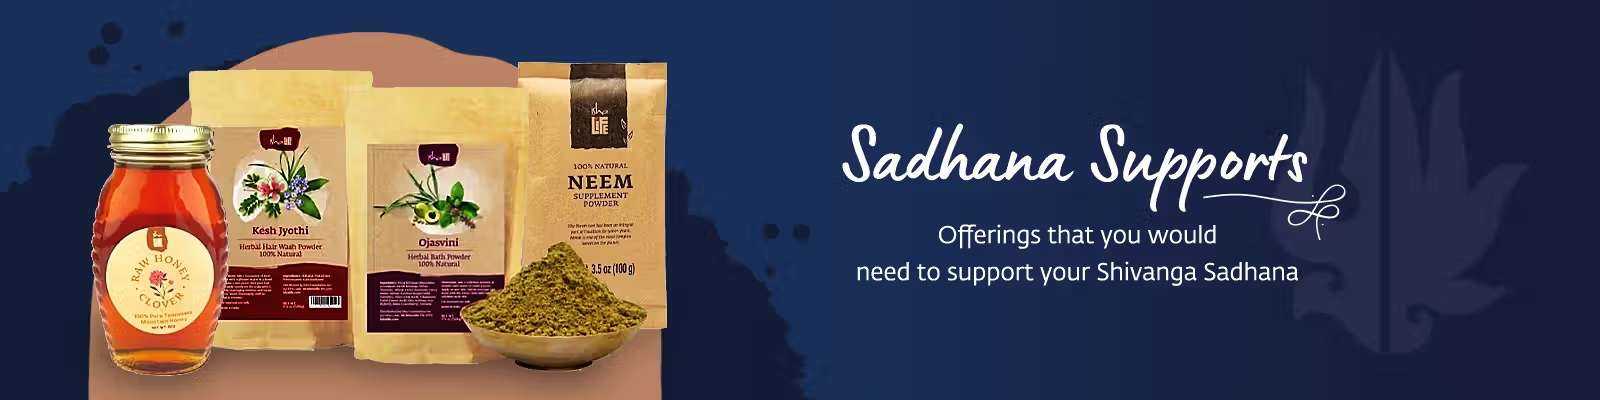 Sadhana Support